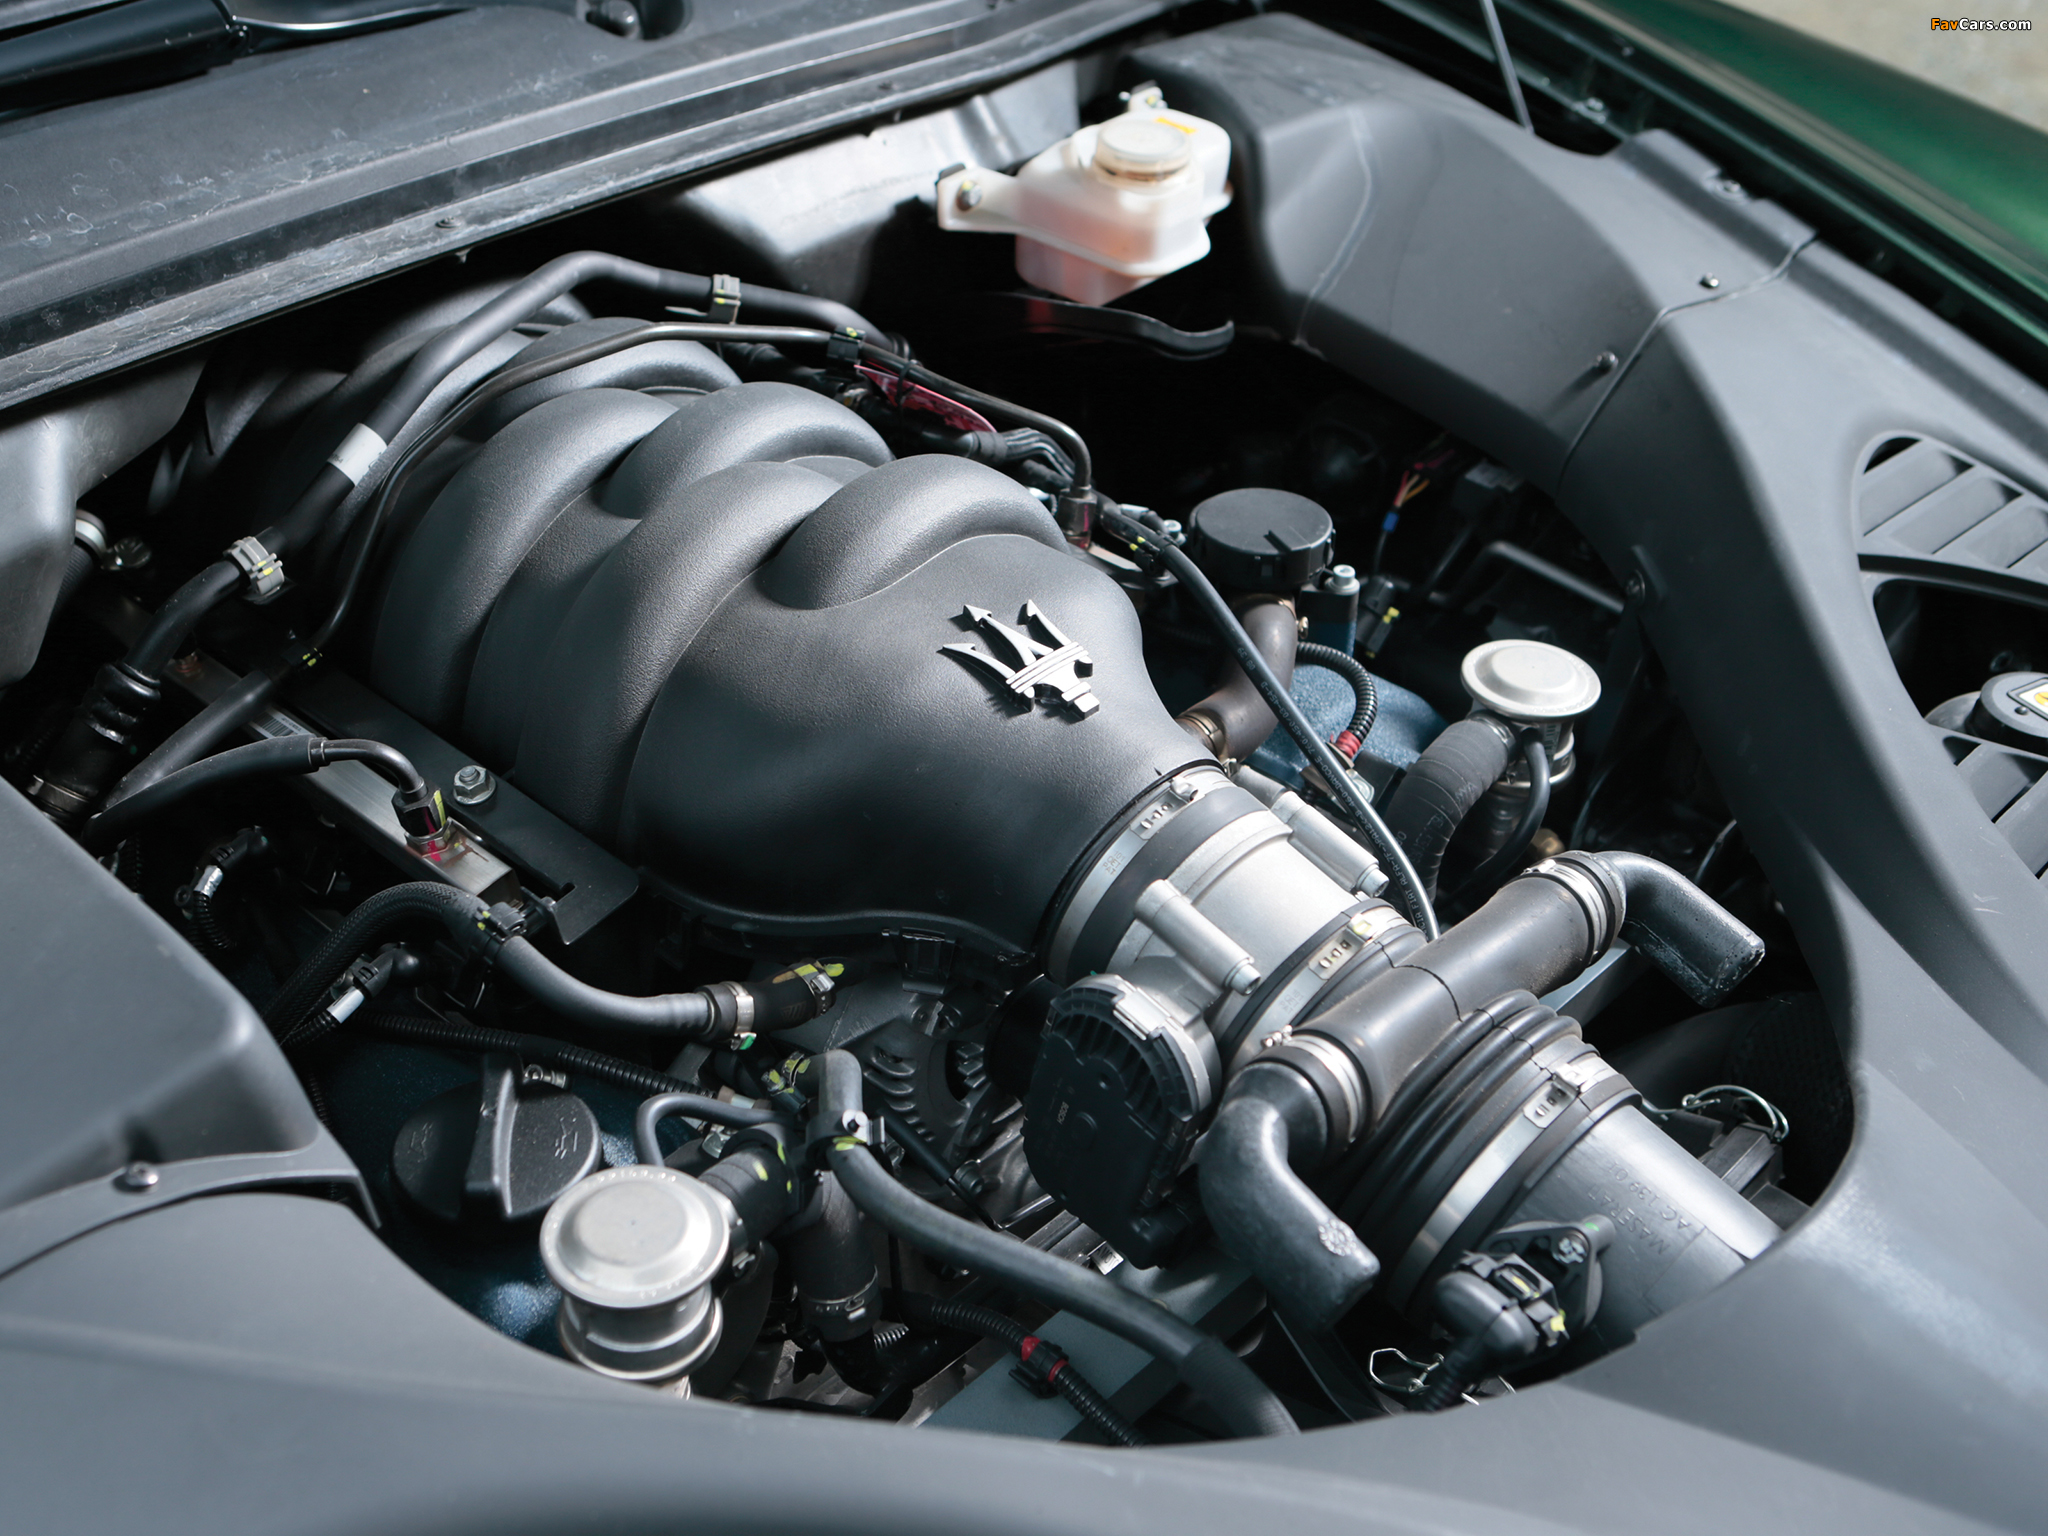 Двигатель мазерати. Мотор Мазерати Кватропорте. Мотор Мазерати 4.2. Maserati Quattroporte Touring Bellagio Fastback. Мотор Мазерати Кватропорте в 8.